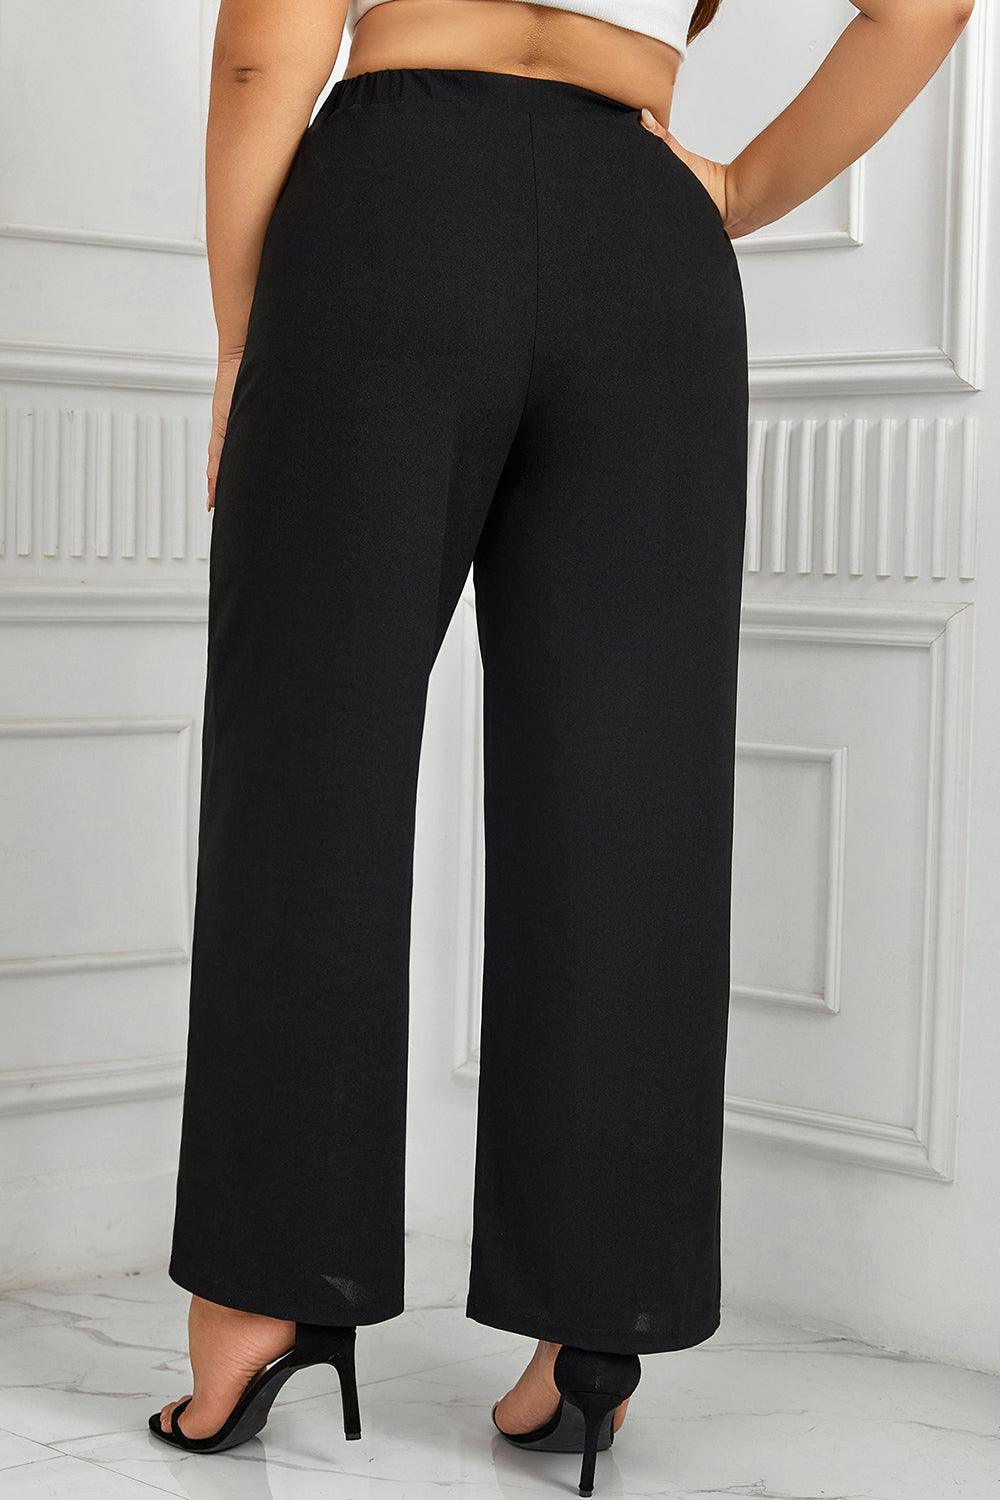 Buttoned Black Plus Size High Waisted Wide Leg Pants - MXSTUDIO.COM